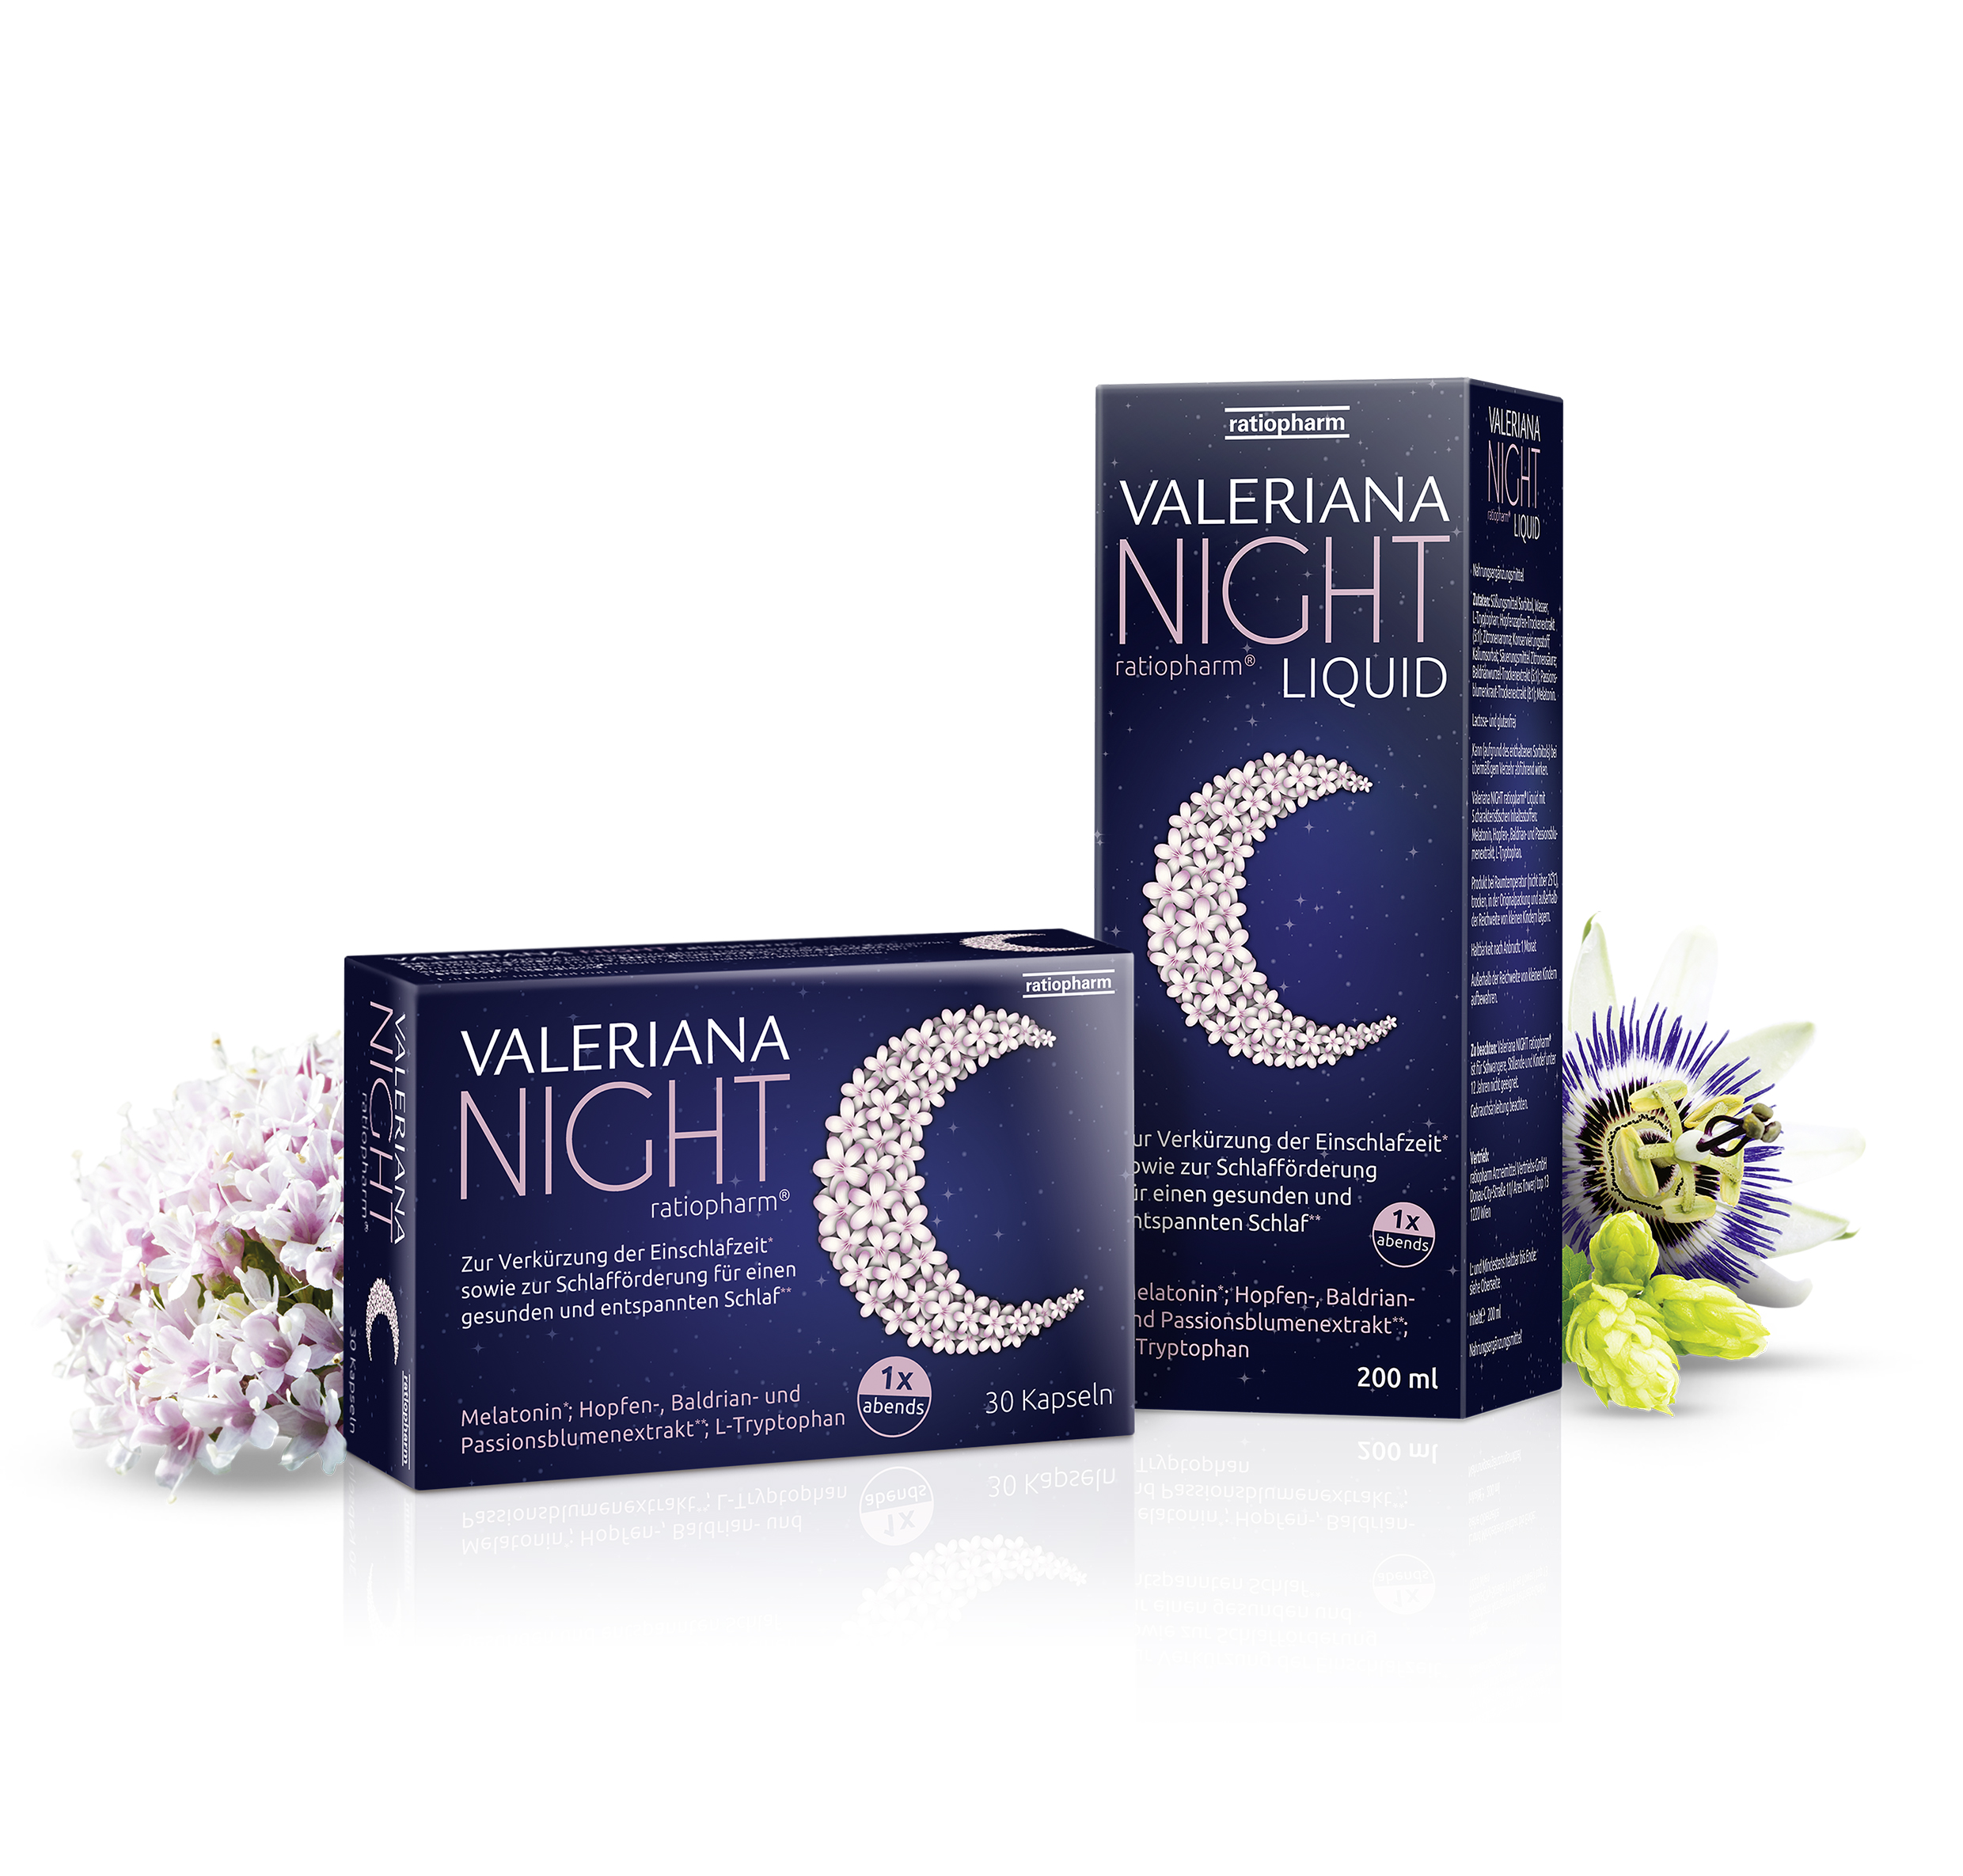 Valeriana NIGHT ratiopharm® LIQUID